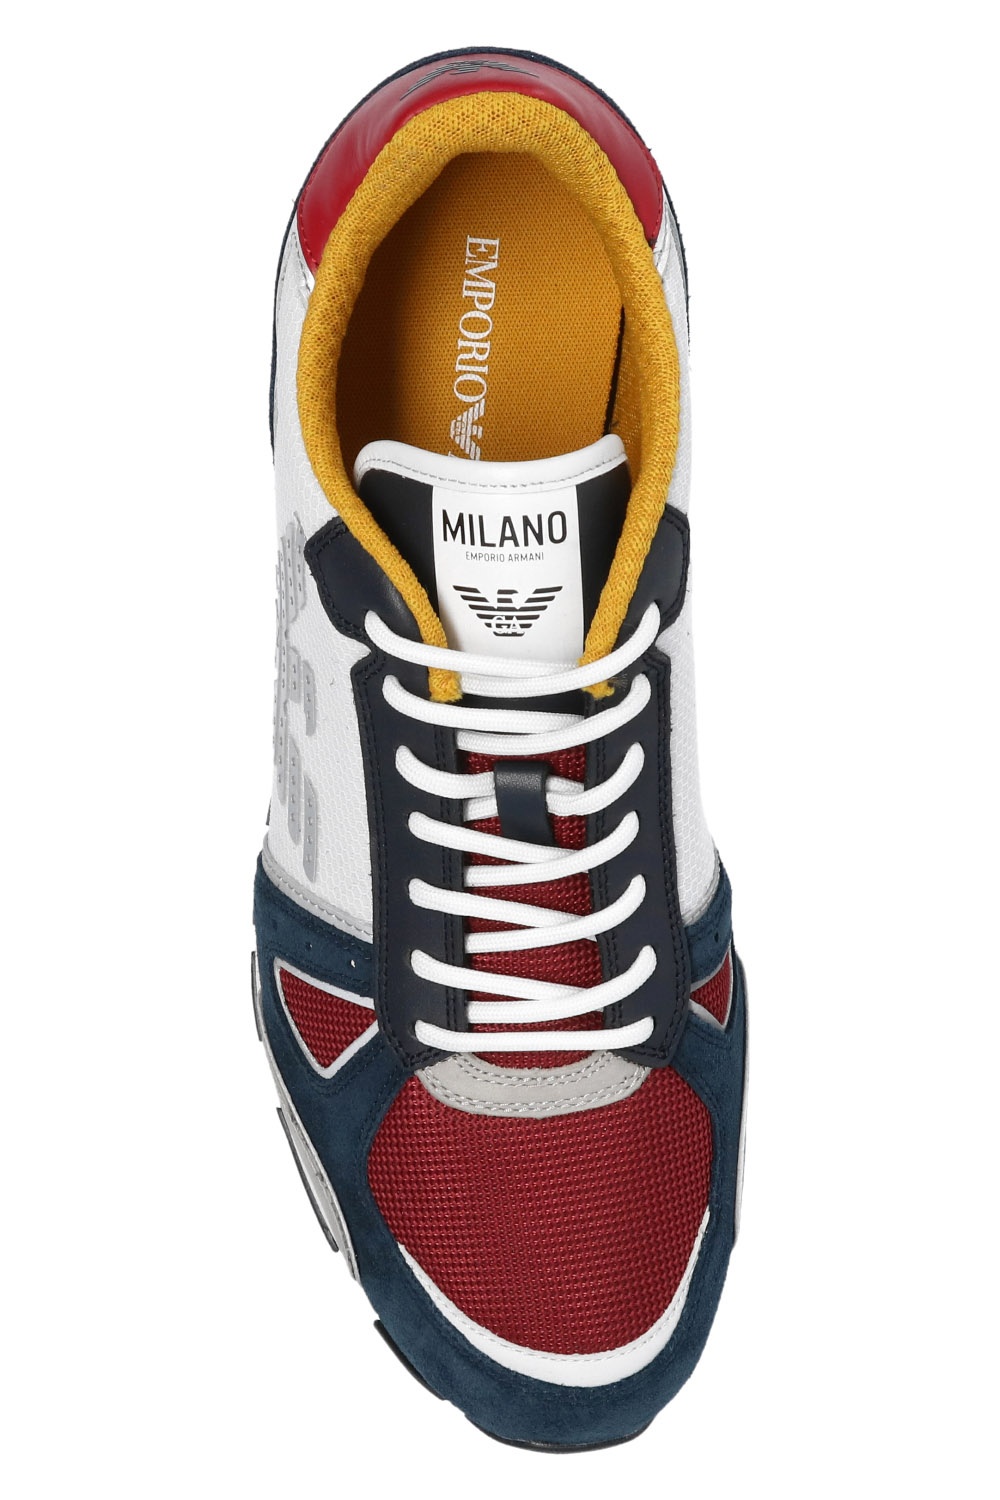 tarwe Authenticatie Ontvangst emporio armani trench coat | IetpShops | Emporio Armani Sneakers with logo  | Men's Shoes